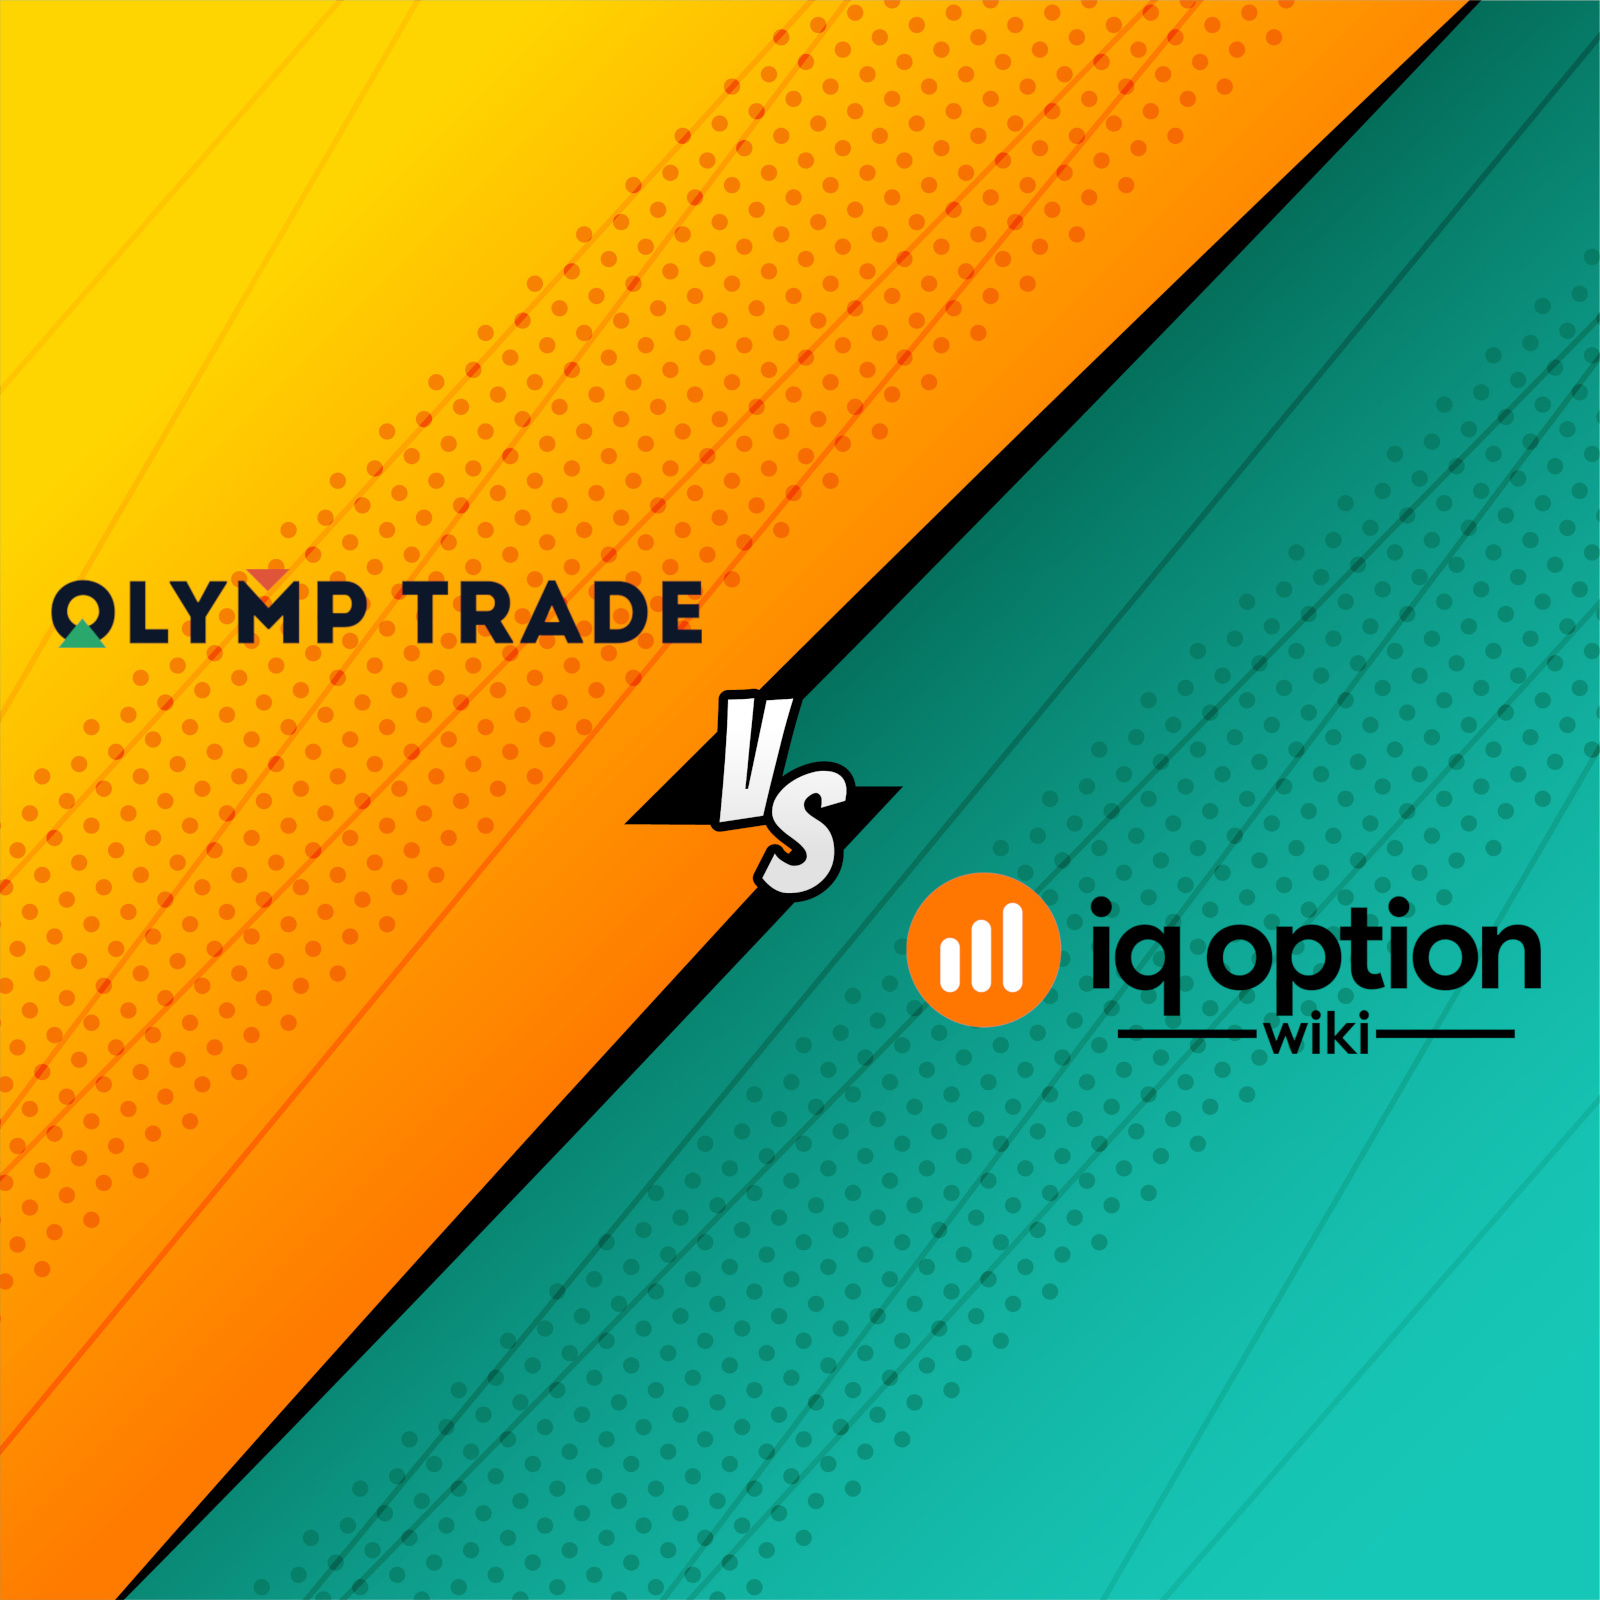 iq option vs olymp trade